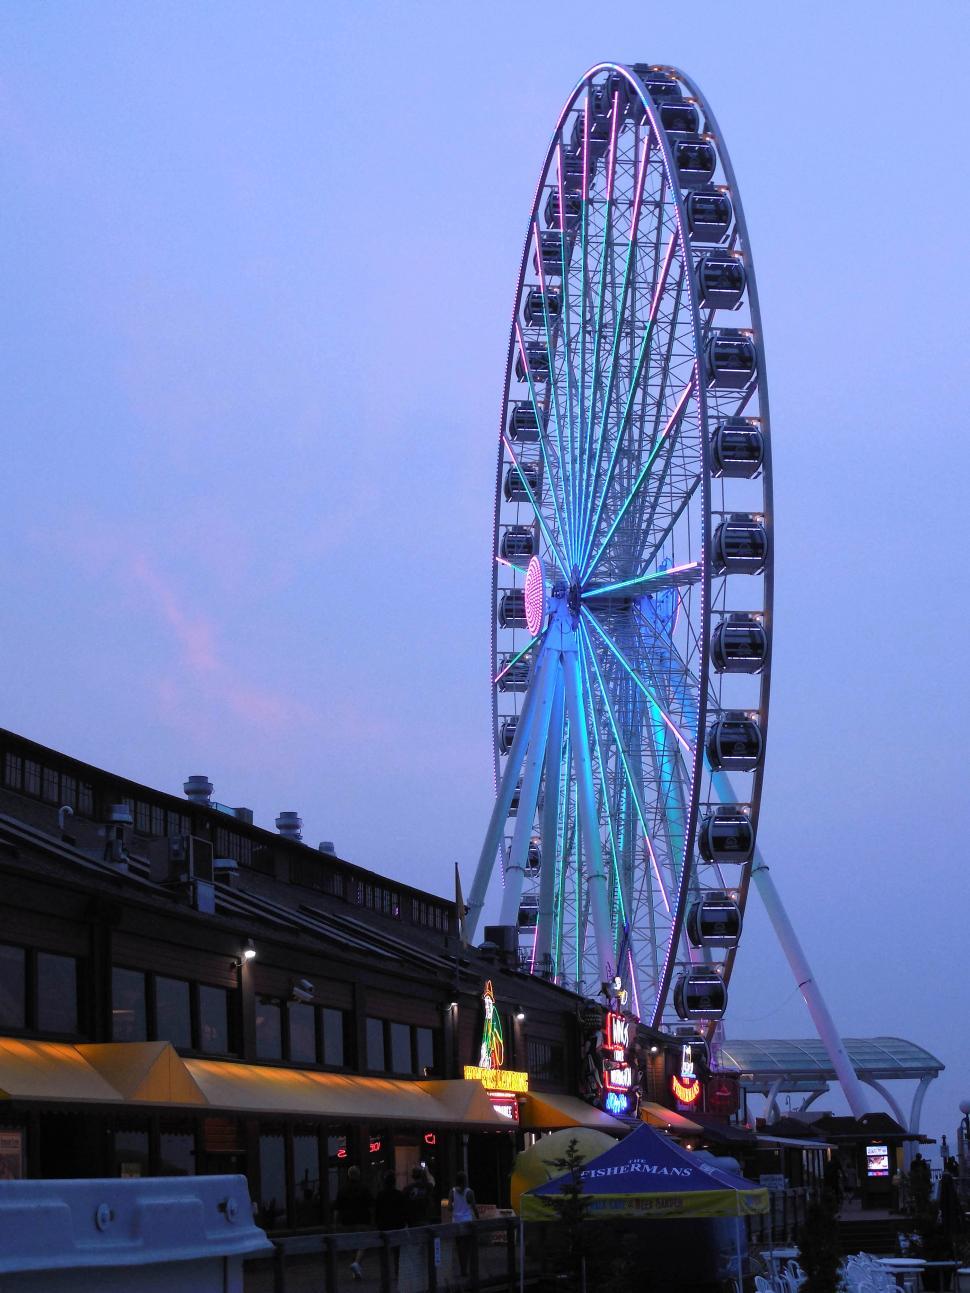 Free Image of Ferris Wheel Next to Building 